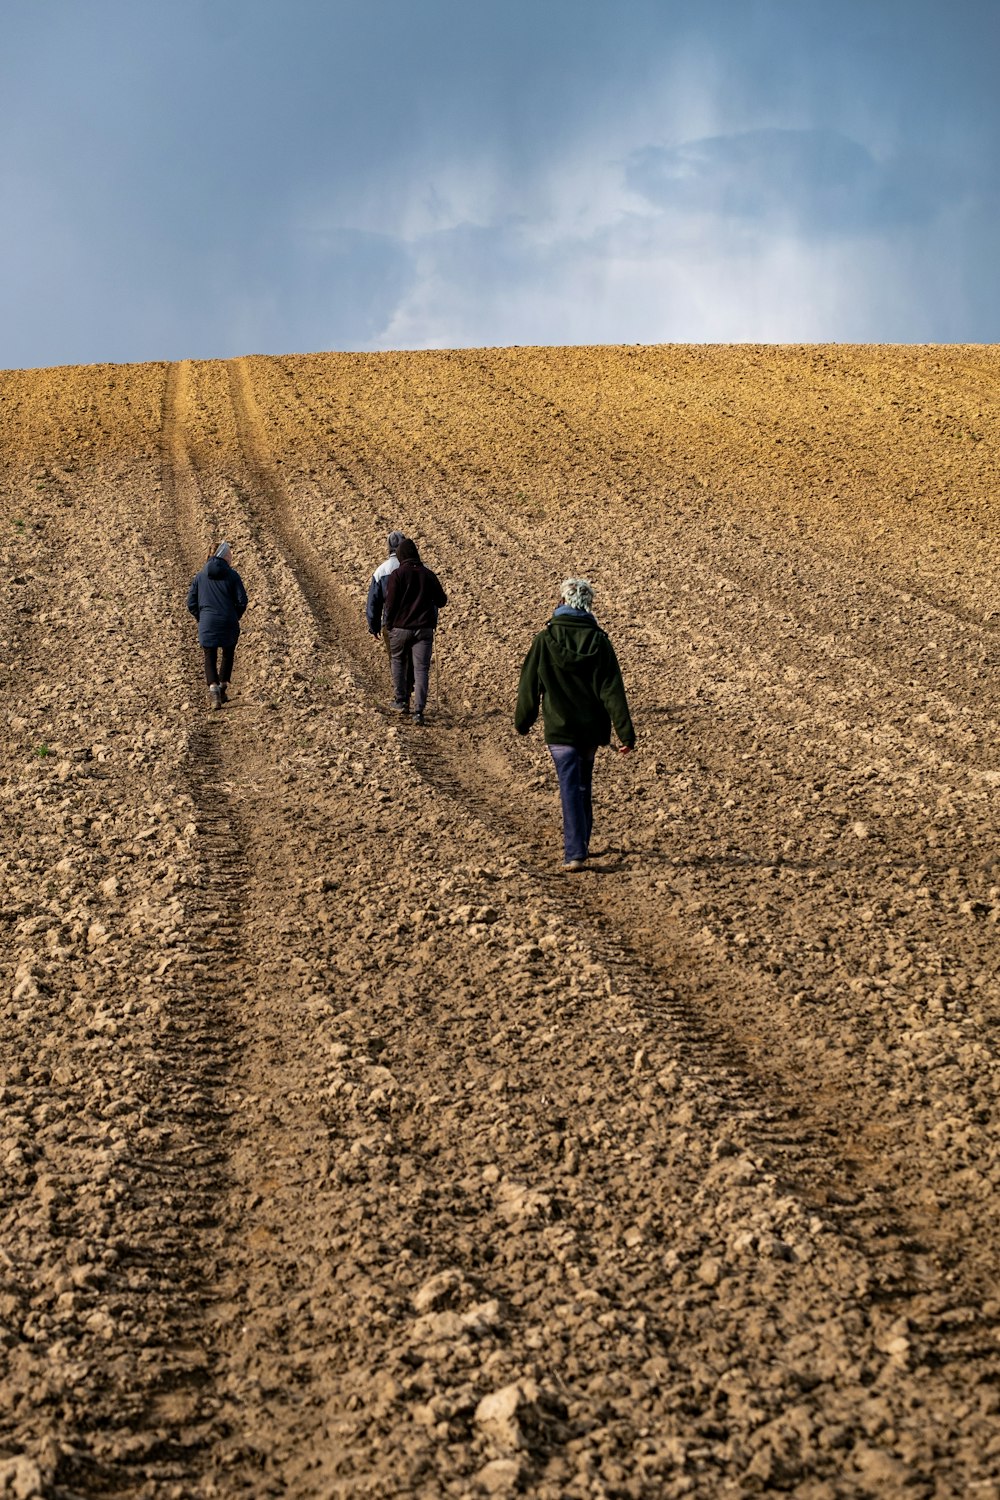 a group of people walking across a dirt field